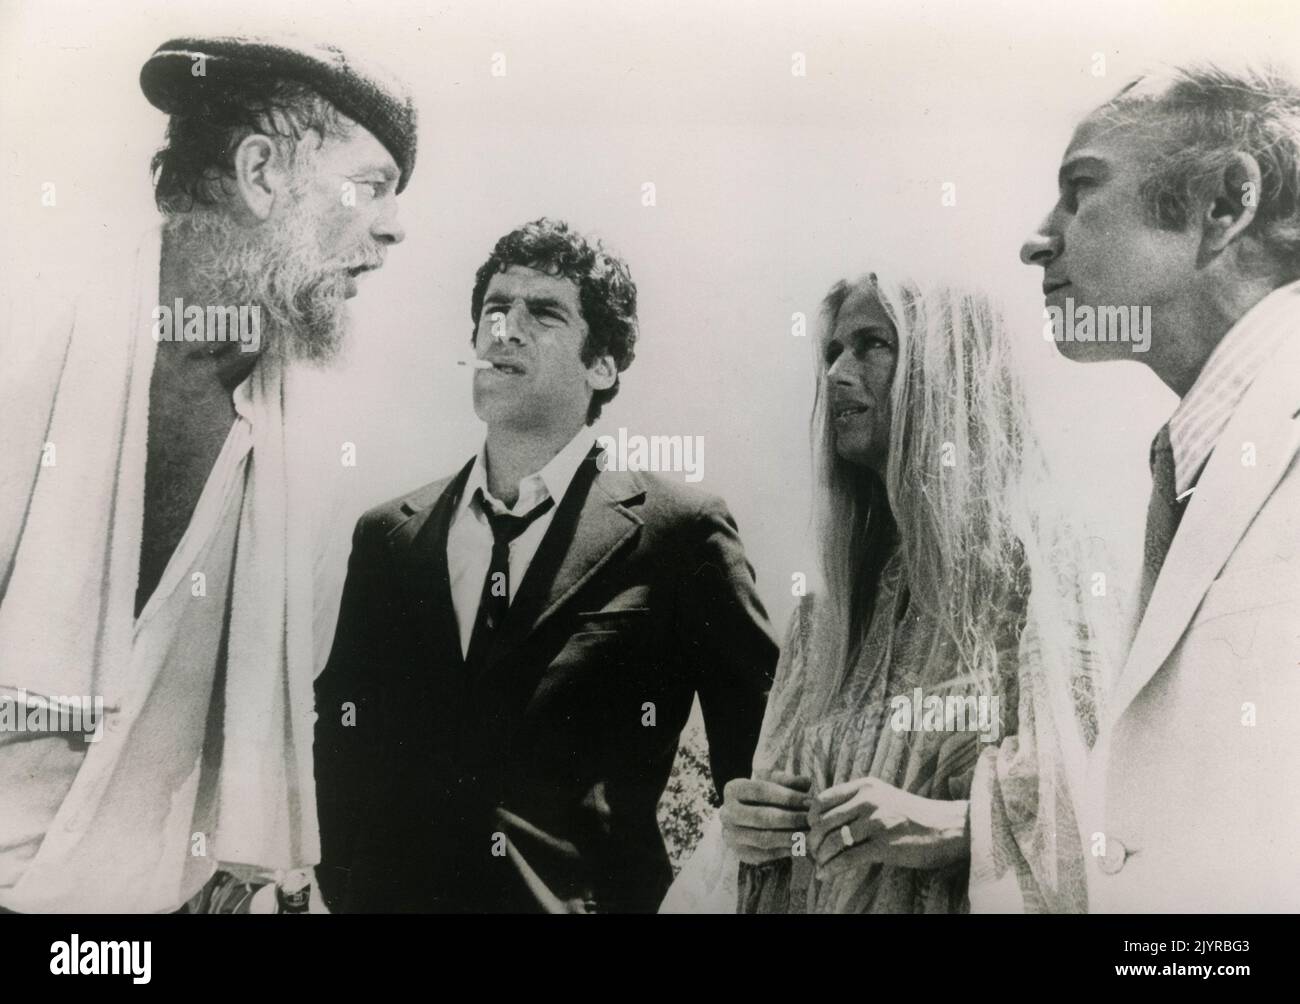 Attori Sterling Hayden, Elliott Gould, Nina van Pallandt e Henry Gibson nel film The Long Arrivederci, USA 1973 Foto Stock